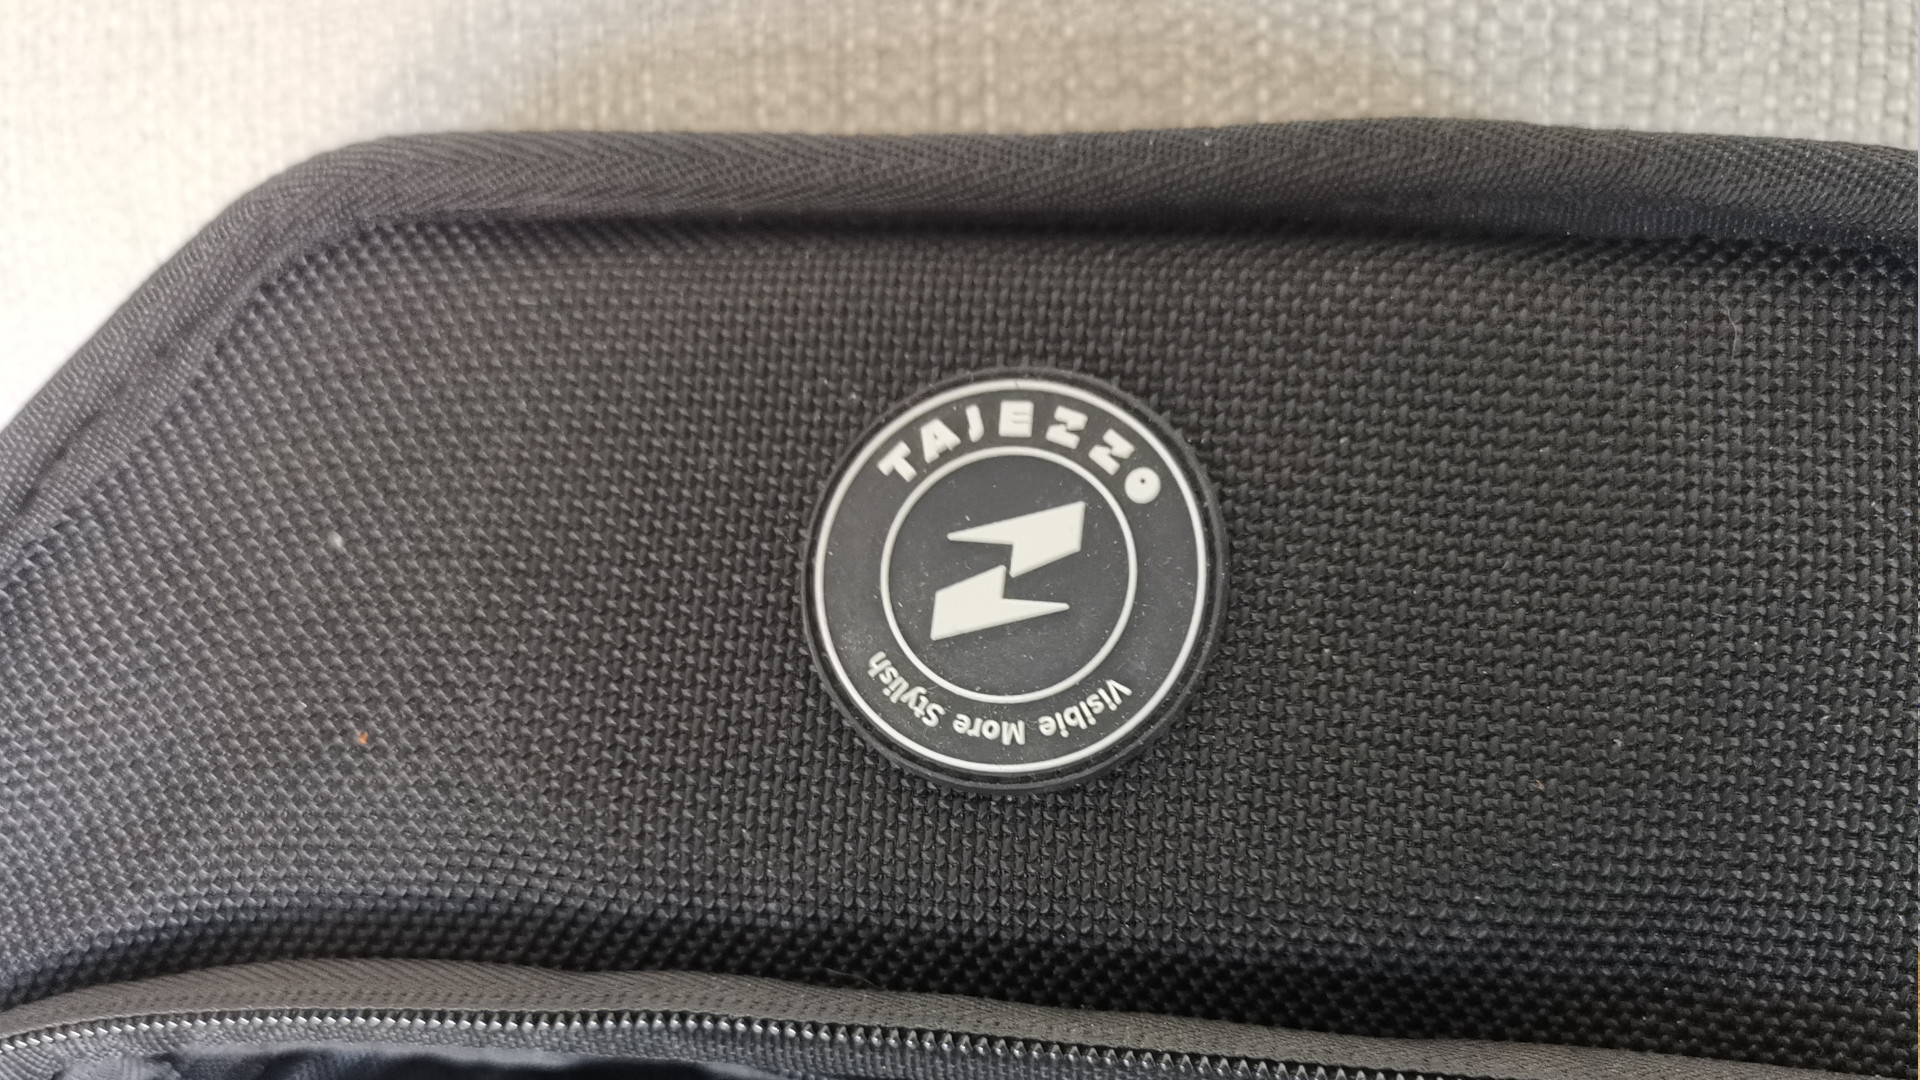 The rubber logo on the Tajezzo PZ5 backpack